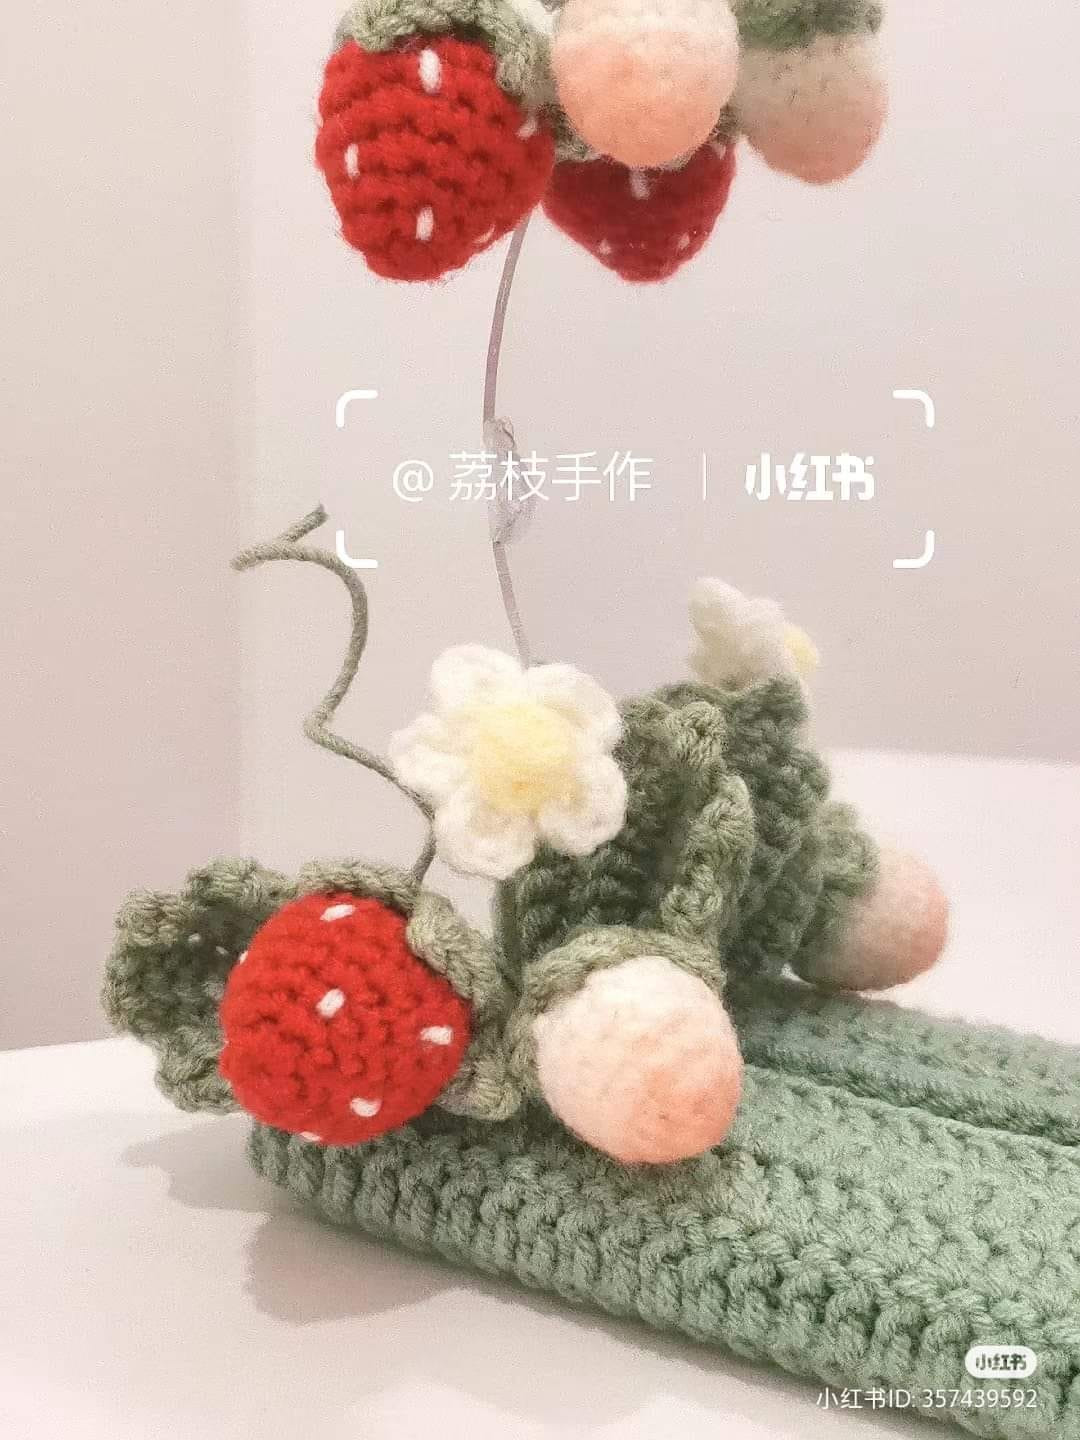 Strawberry crochet pattern